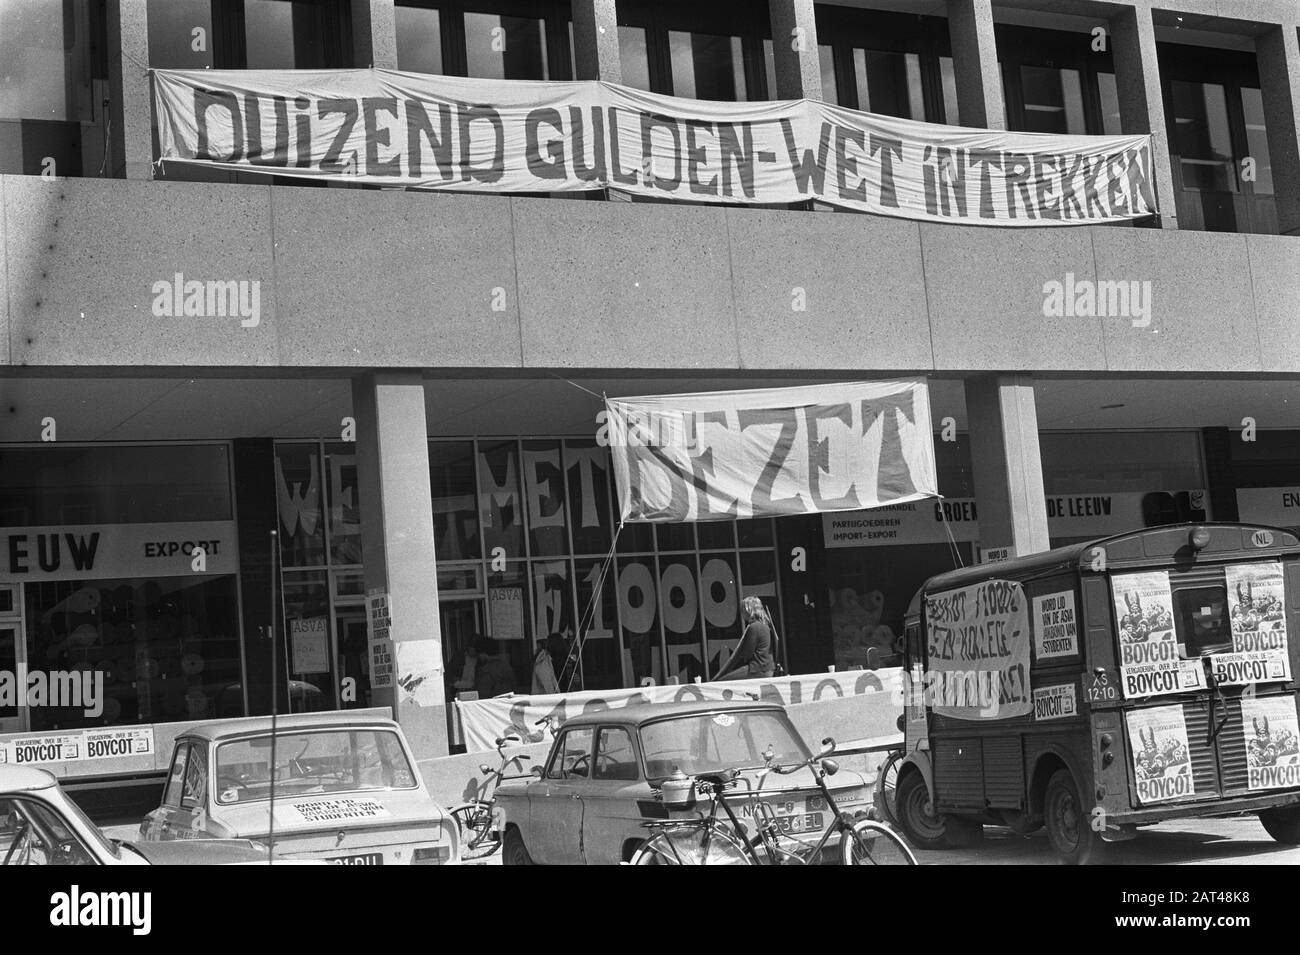 Anmeldung Zentrum Universität Amsterdam (Maupoleum) besetzt, Banner an der Fassade Datum: 24. August 1972 Ort: Amsterdam, Noord-Holland Schlüsselwörter: Demonstrationen, Banner, Studenten, Universitäten Stockfoto